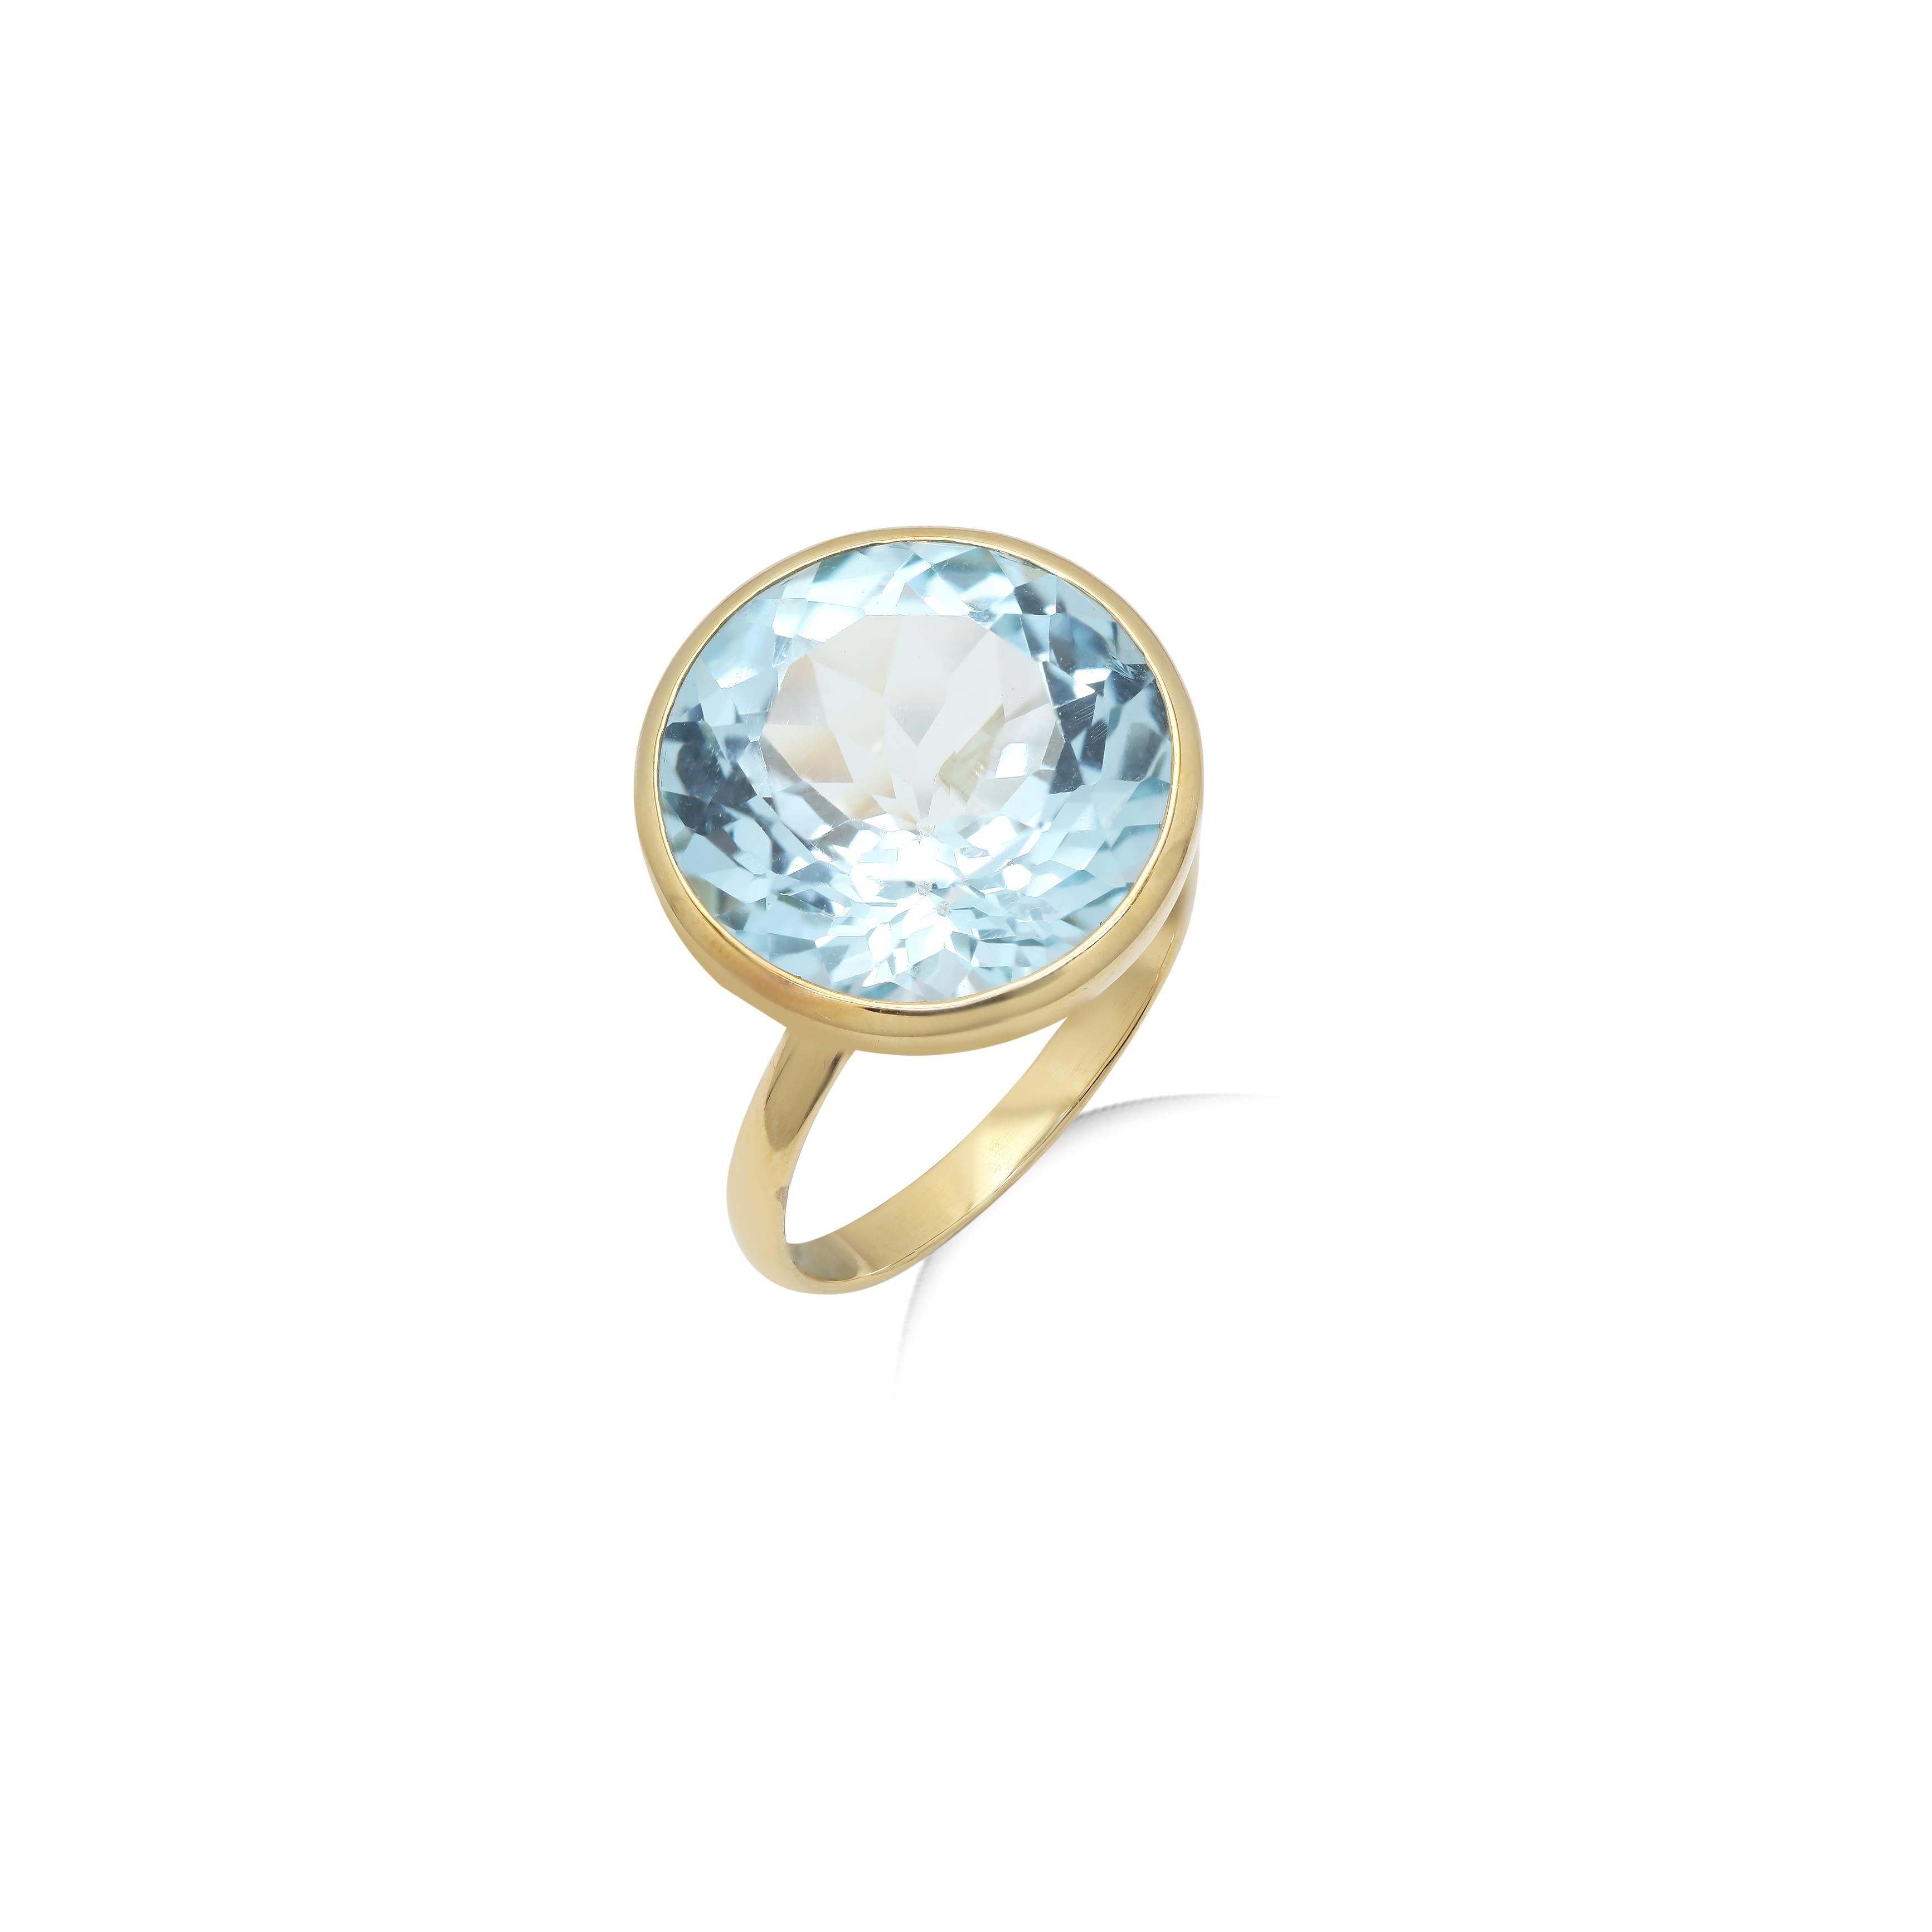 For Sale:  4 Carat Bezel Set Aquamarine Gemstone Ring in 18K Solid Yellow Gold 5